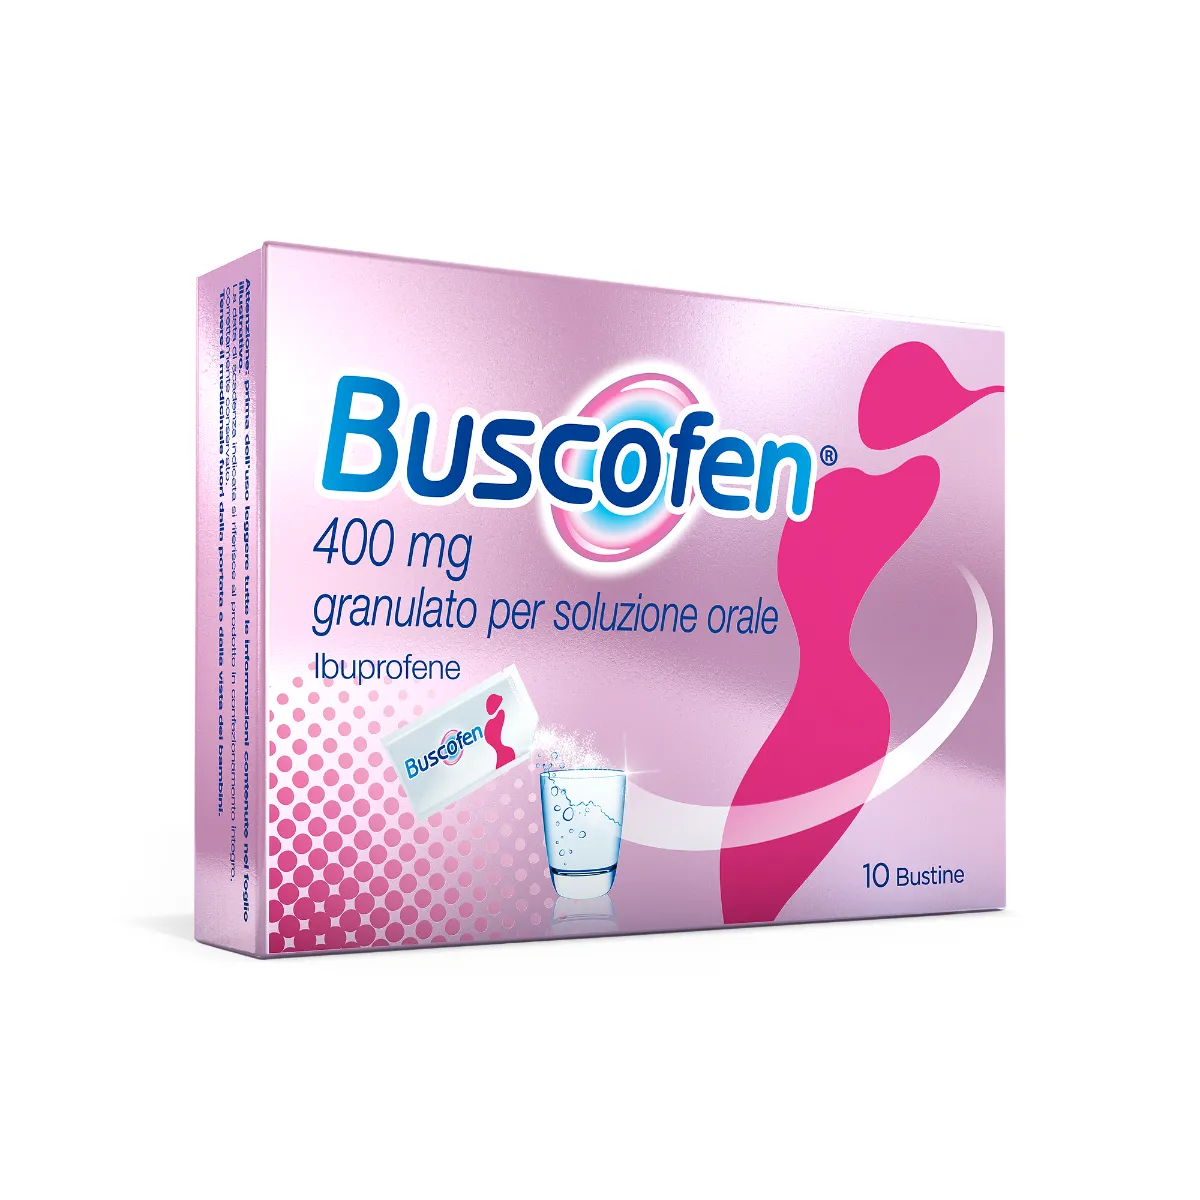 Buscofen 400 mg 10 Bustine